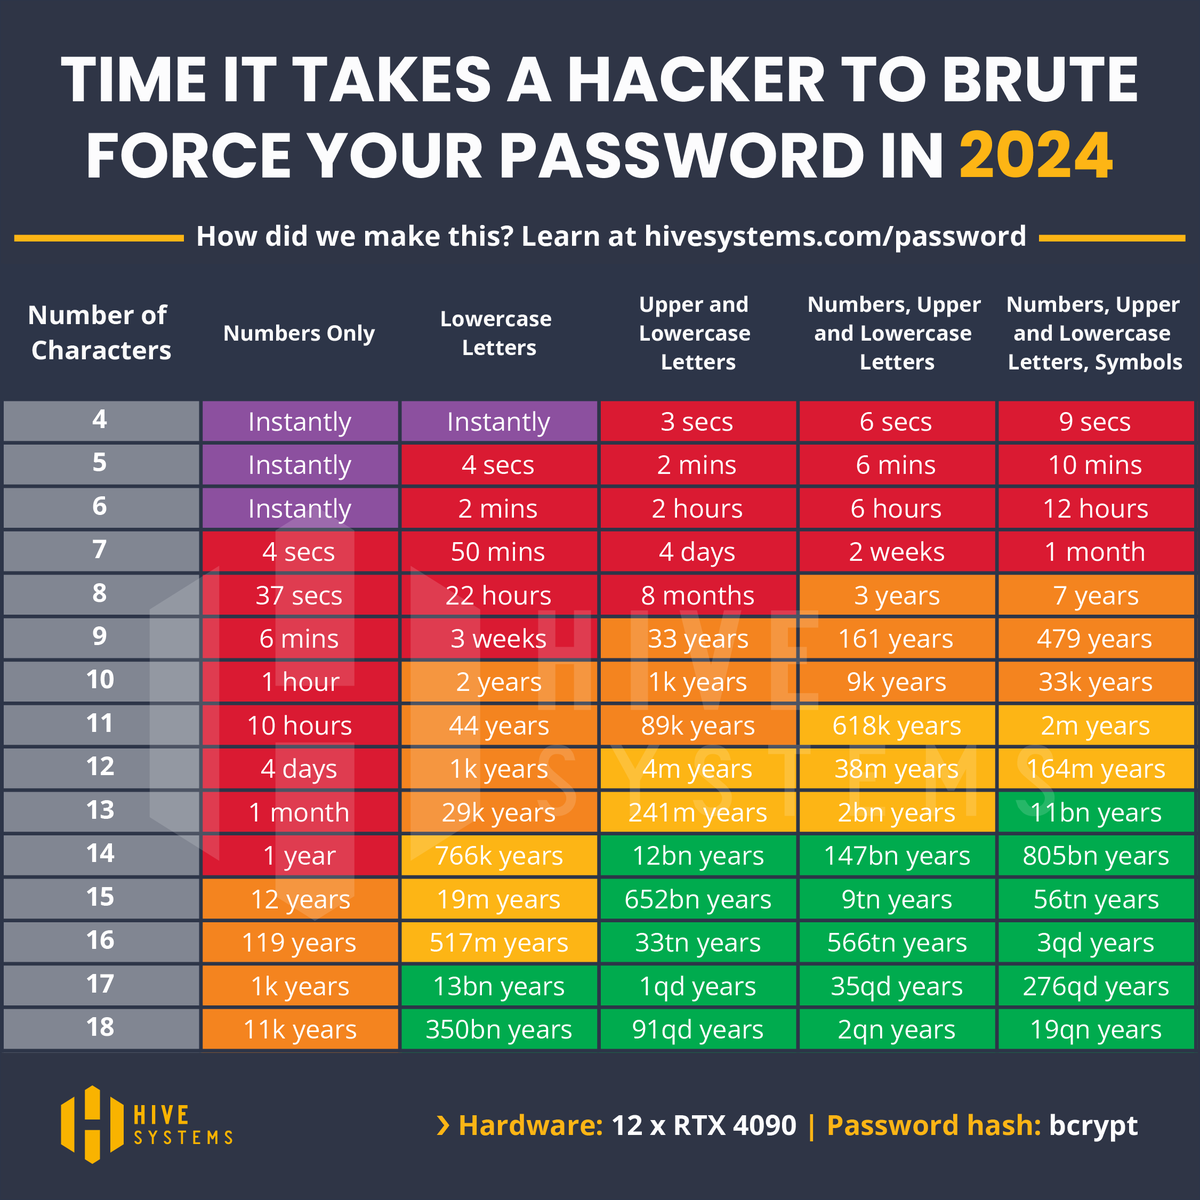 Time it takes a #hacker to brute force your #password in 2024 - #CyberSecurity #privacy @technicitymag @gvalan @DrFerdowsi @junjudapi @enricomolinari @avrohomg @kuriharan @fogle_shane @JolaBurnett @techpearce2 @drhiot @JohnMaynardCPA @mary_gambara @stanleychen0402 @pdpsingha